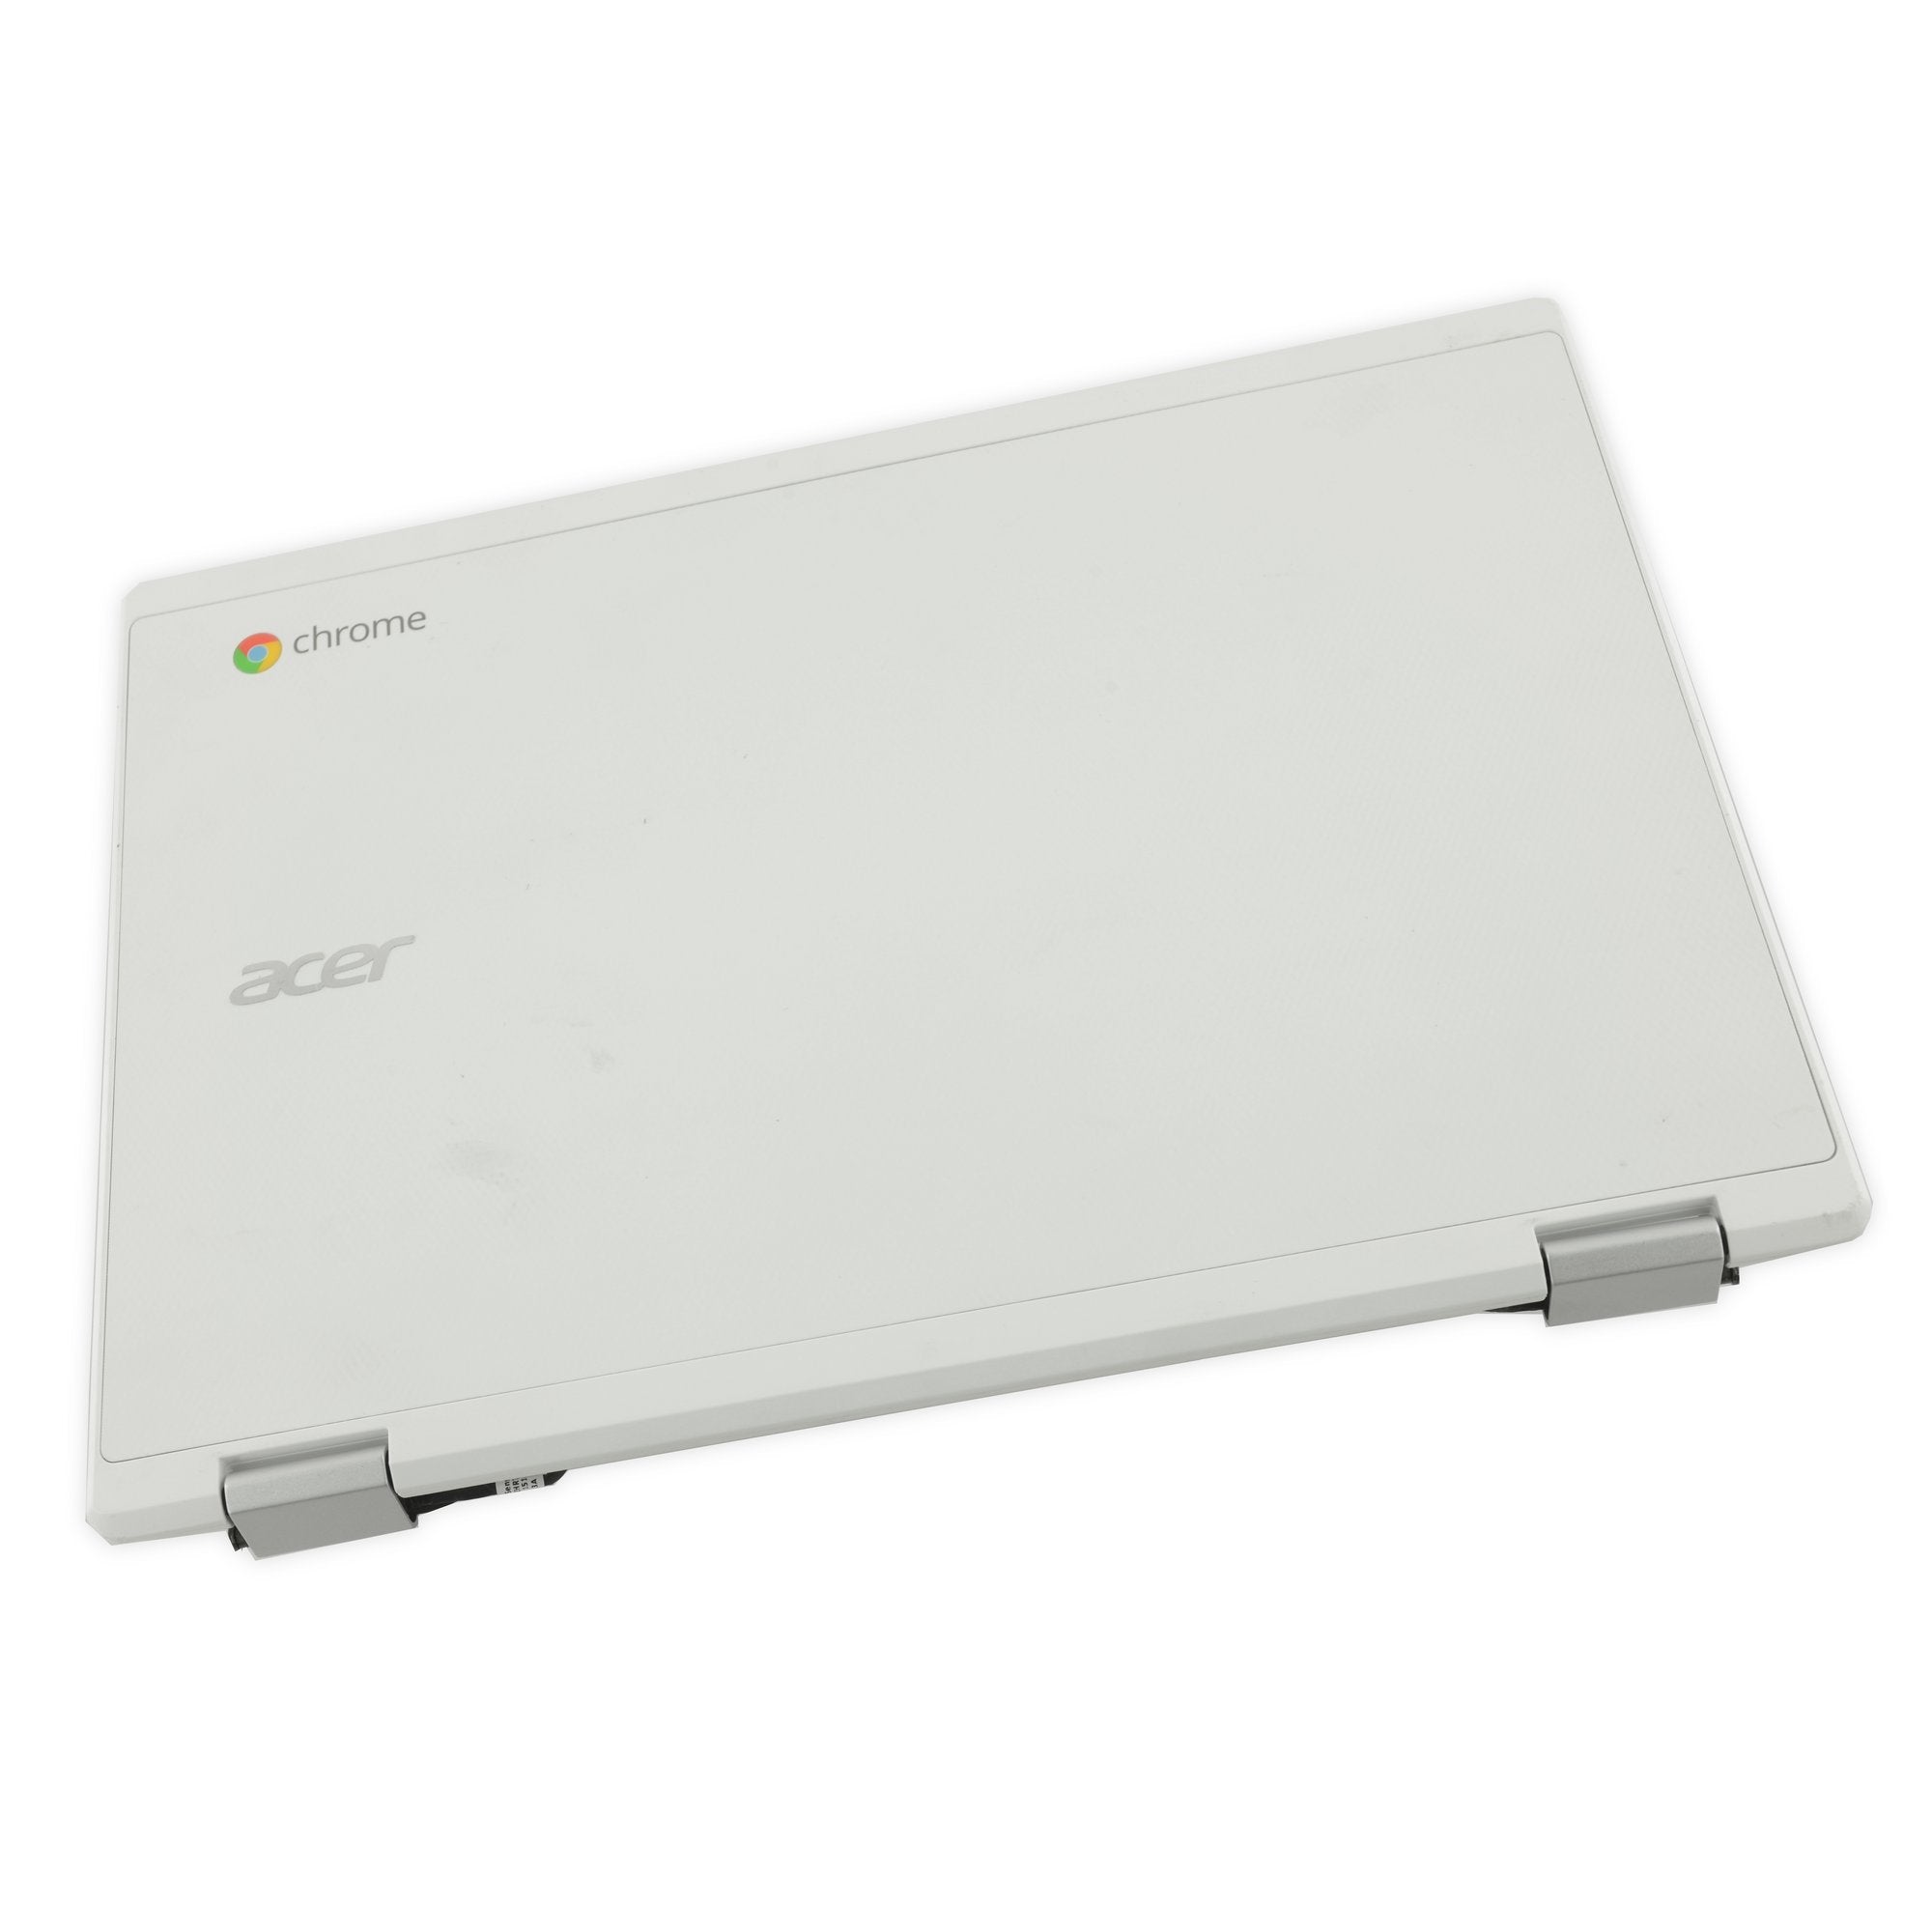 Acer Chromebook CB5-132T-C1LK Display Assembly